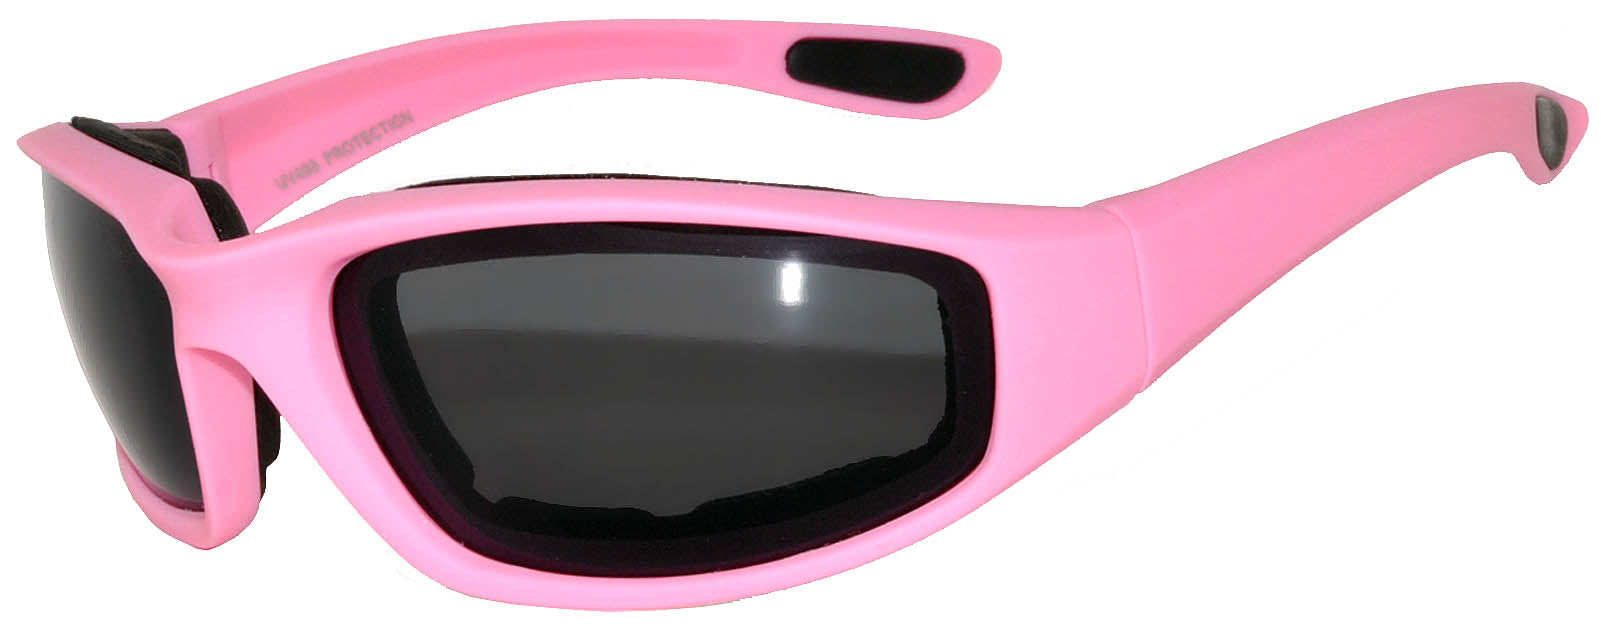 motorcycle sunglasses 